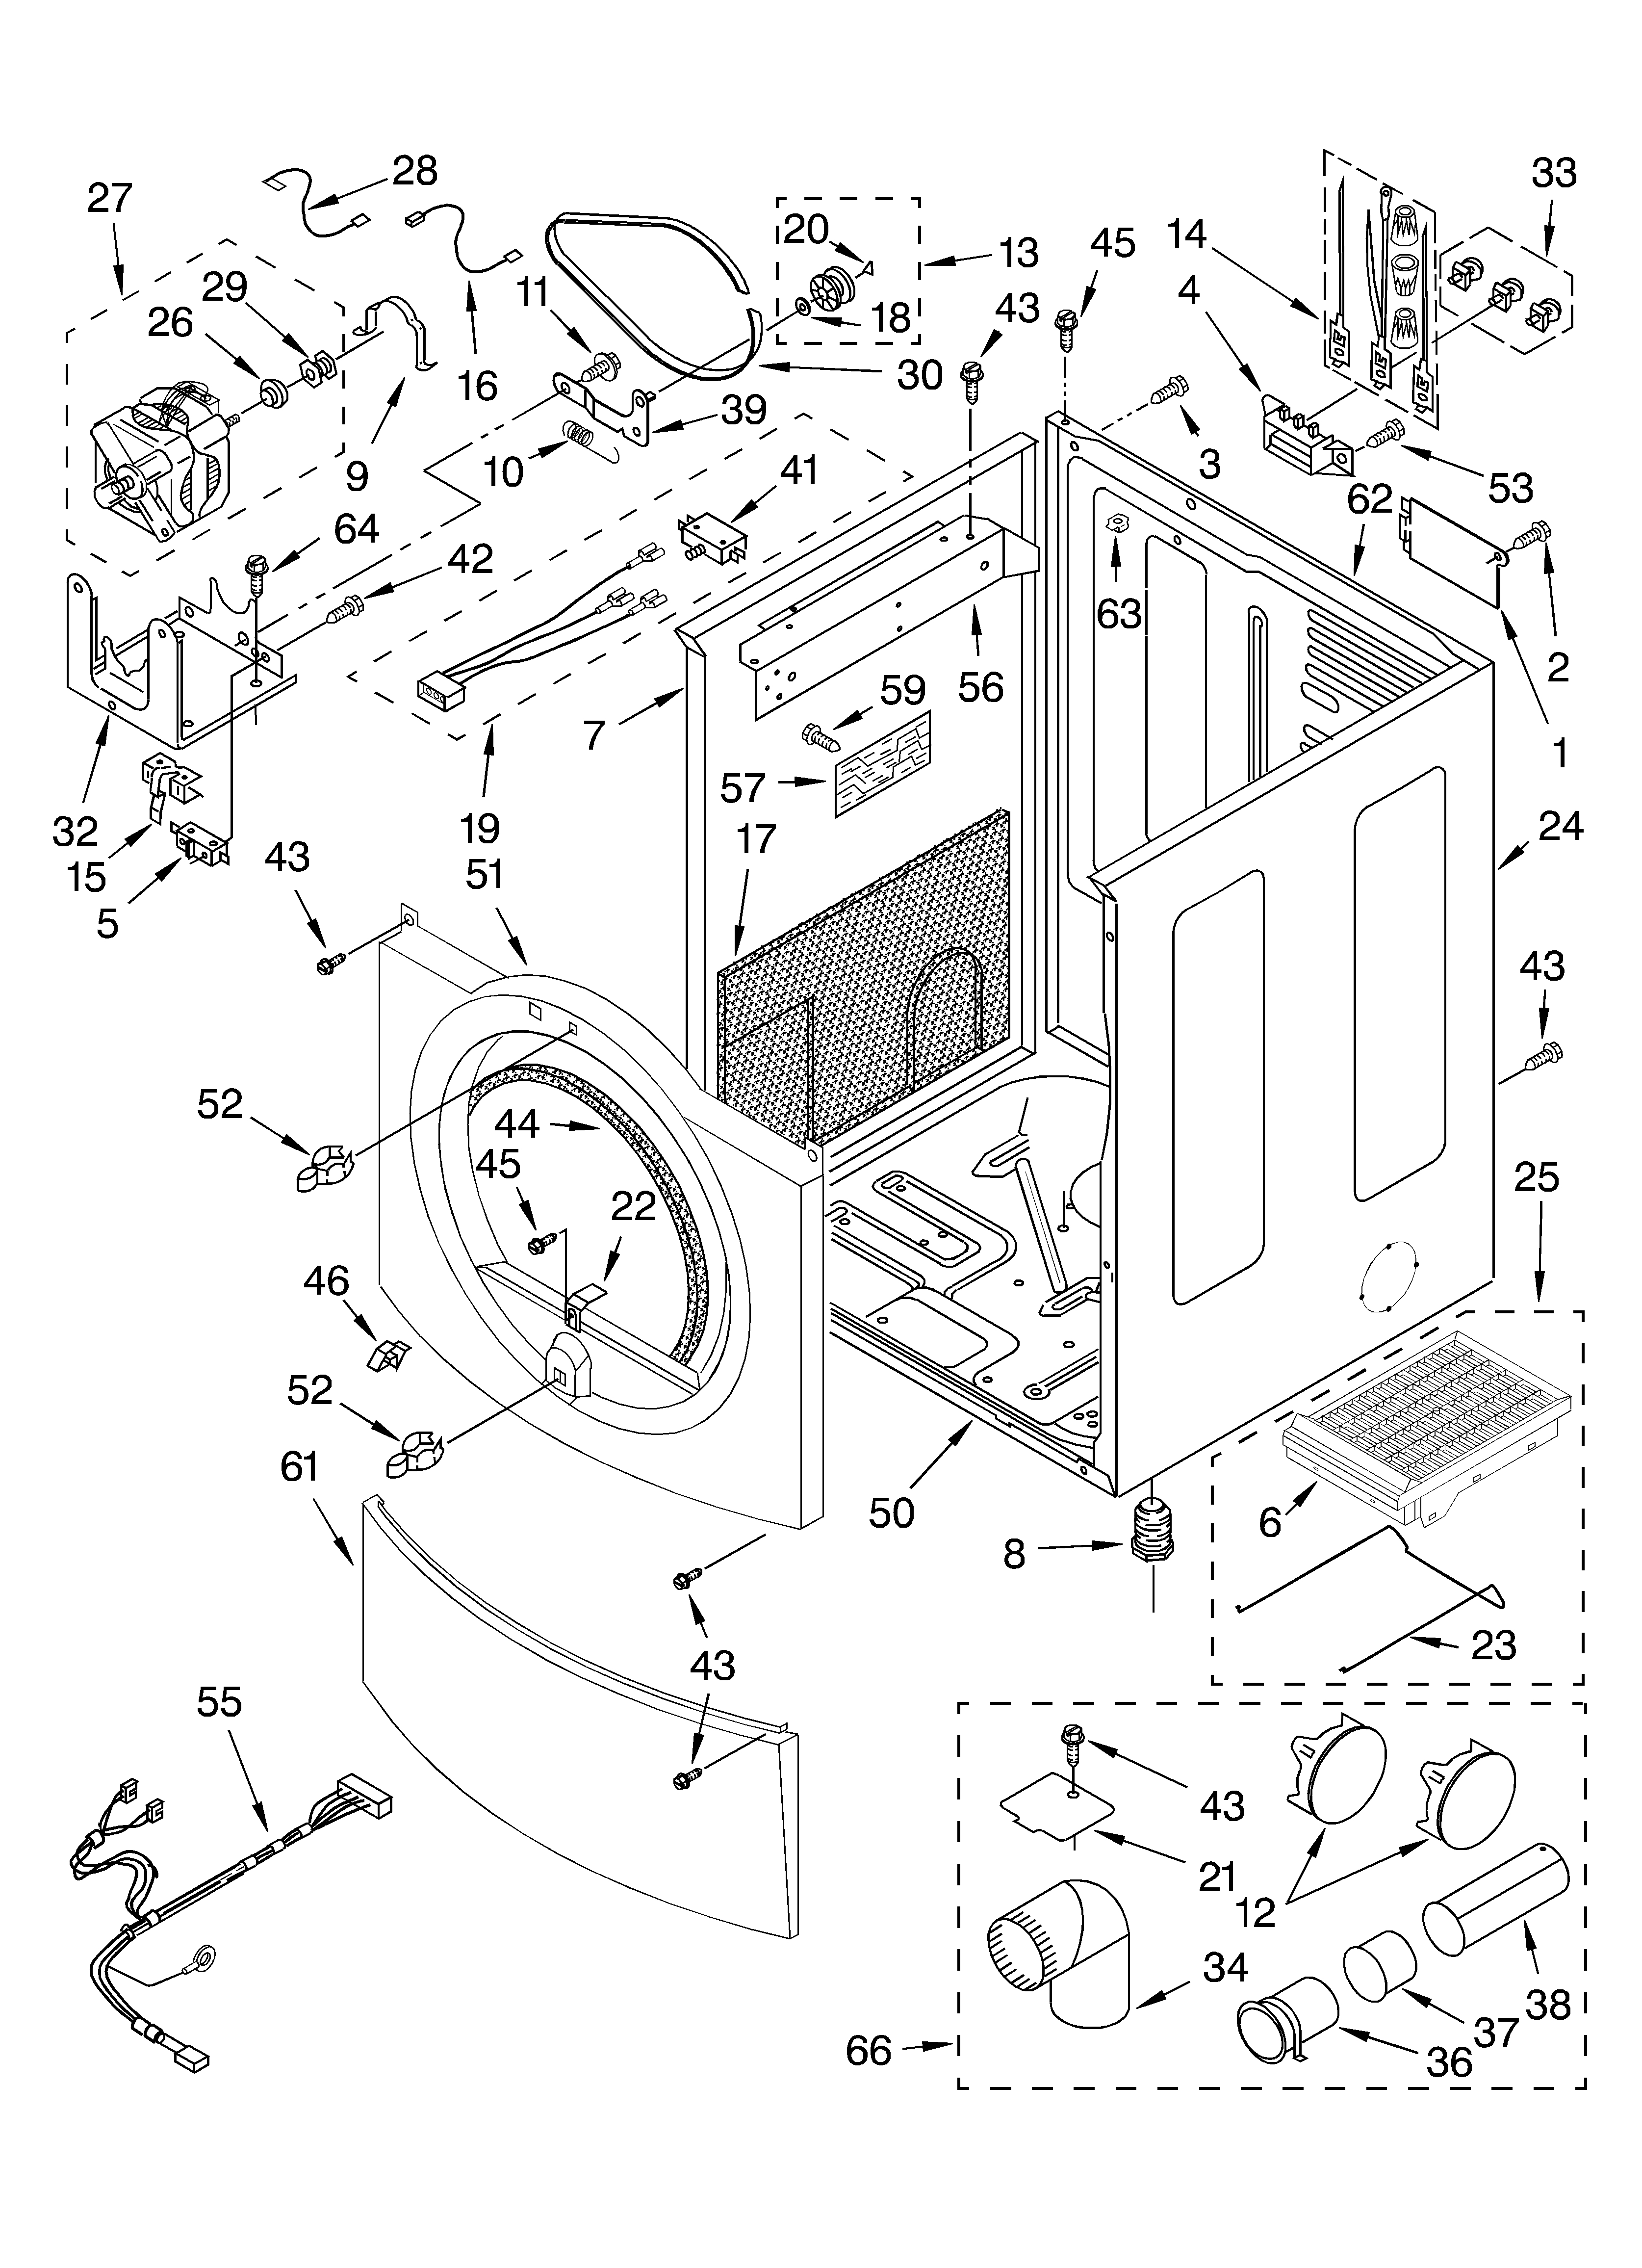 Whirlpool Dryer Wiring Diagram Manual | Wiring Diagram - Whirlpool Dryer Wiring Diagram